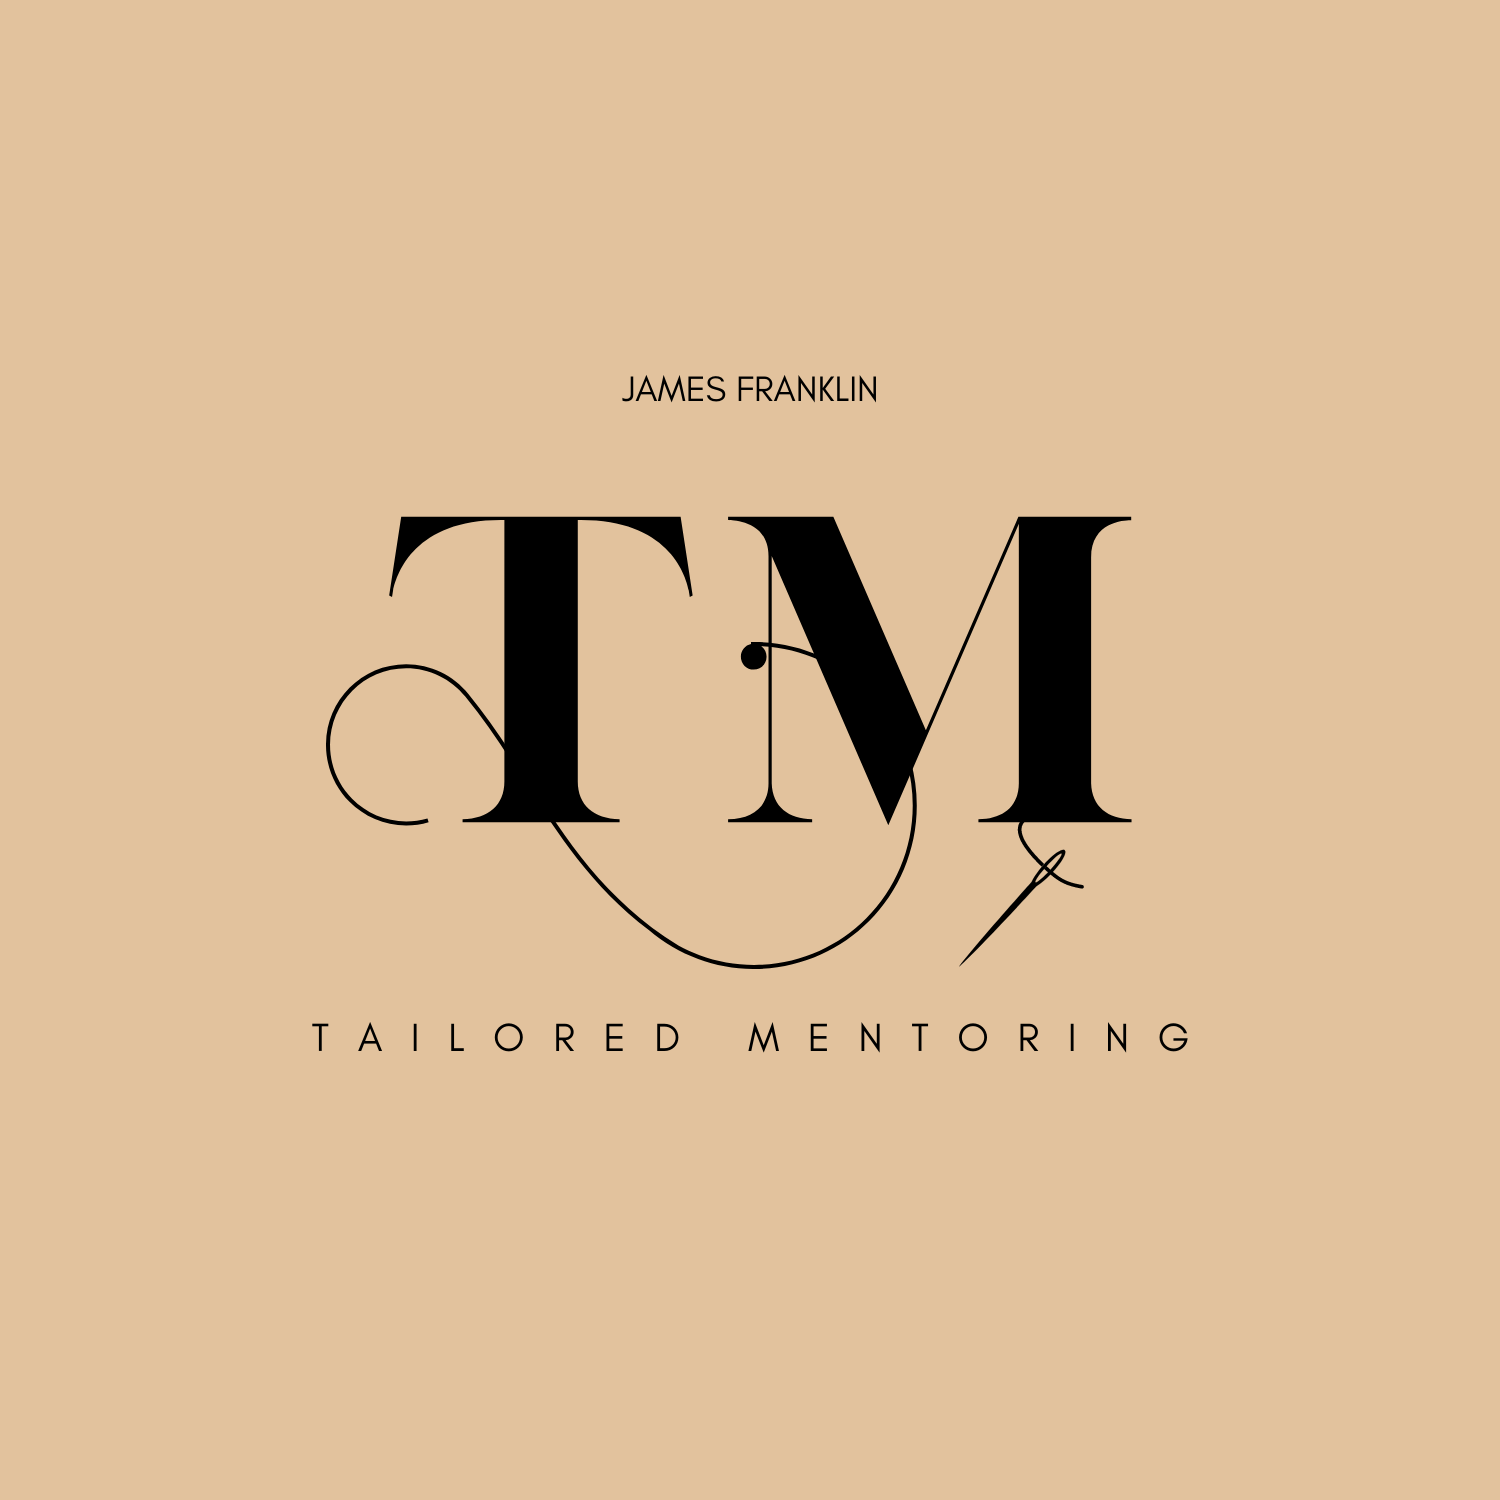 Tailored Mentoring Ltd